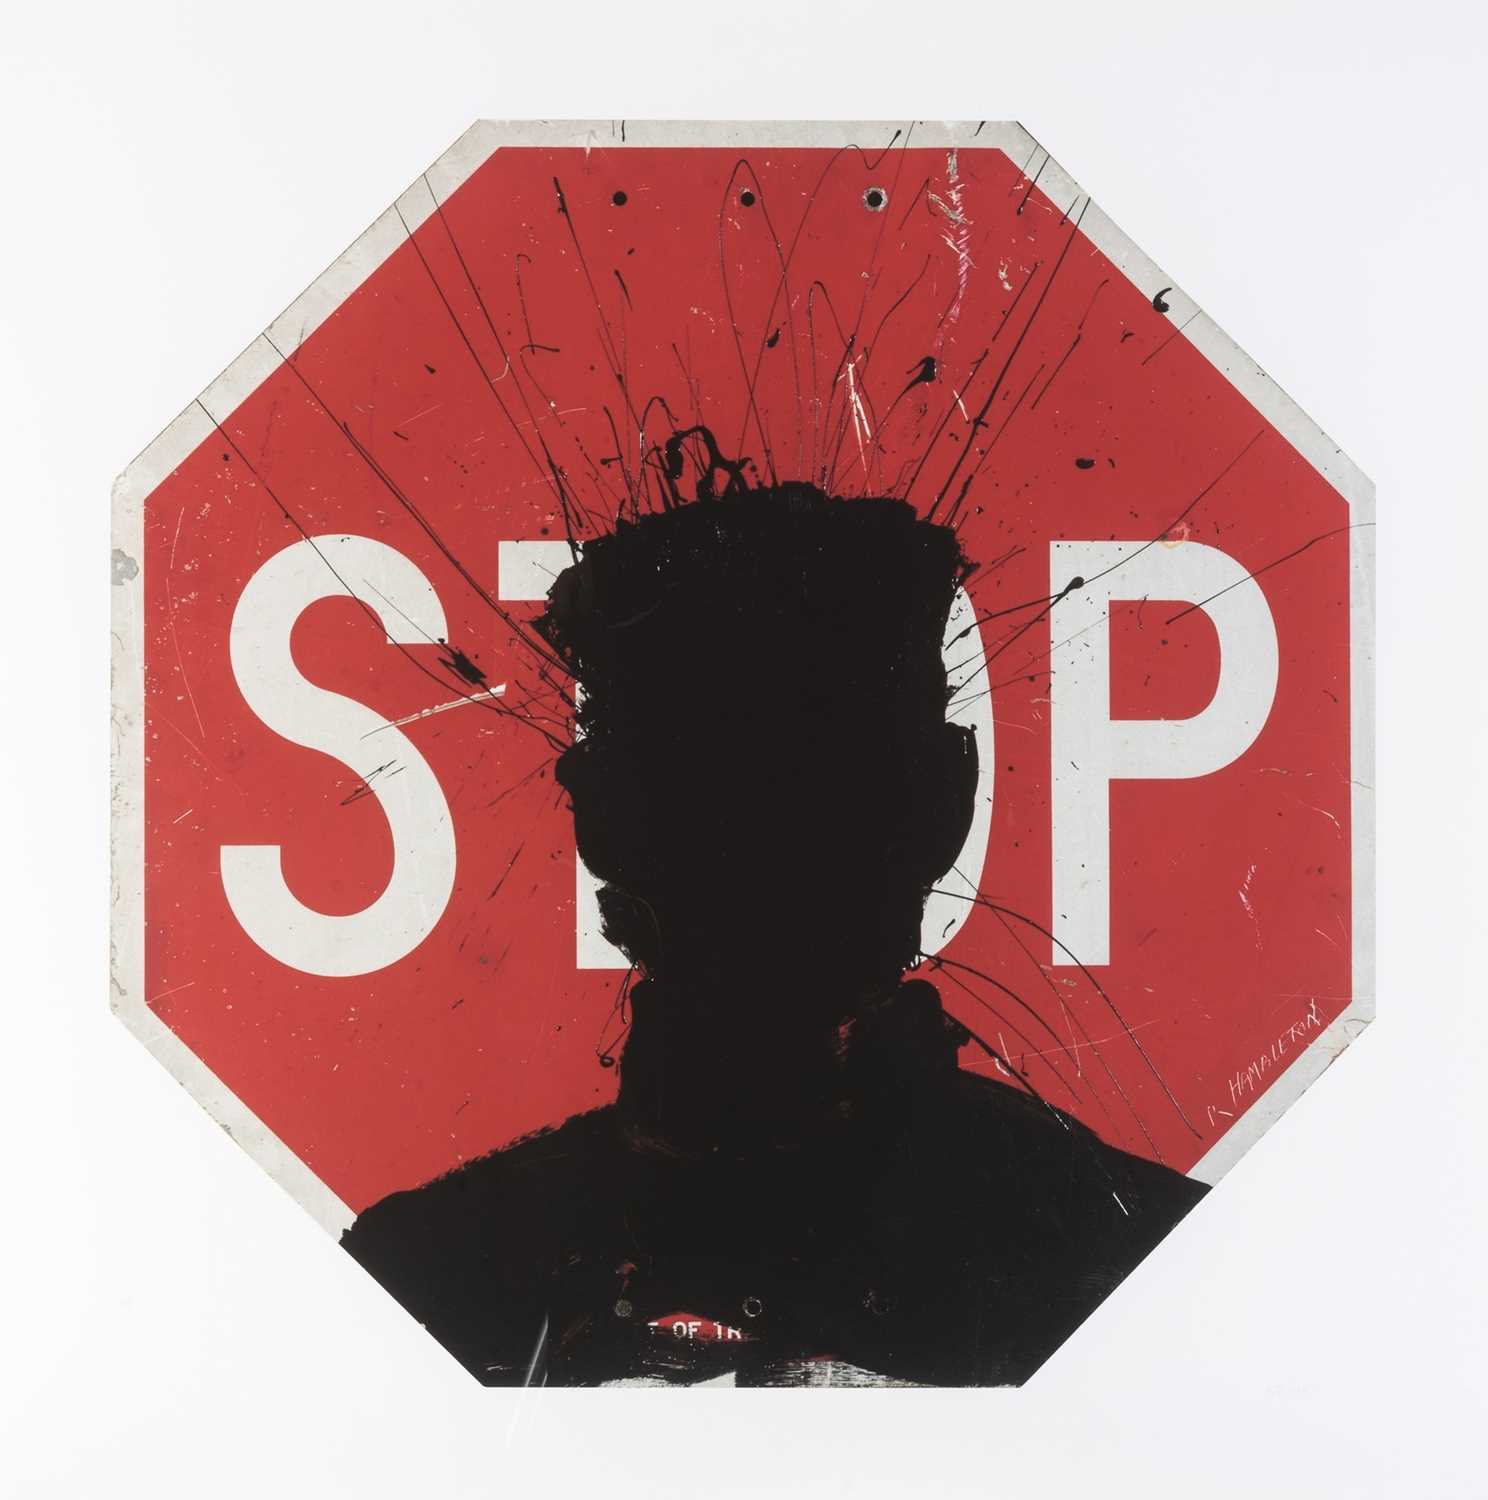 Lot 255 - Richard Hambleton (Canadian 1952-2017), 'Stop Sign', 2018